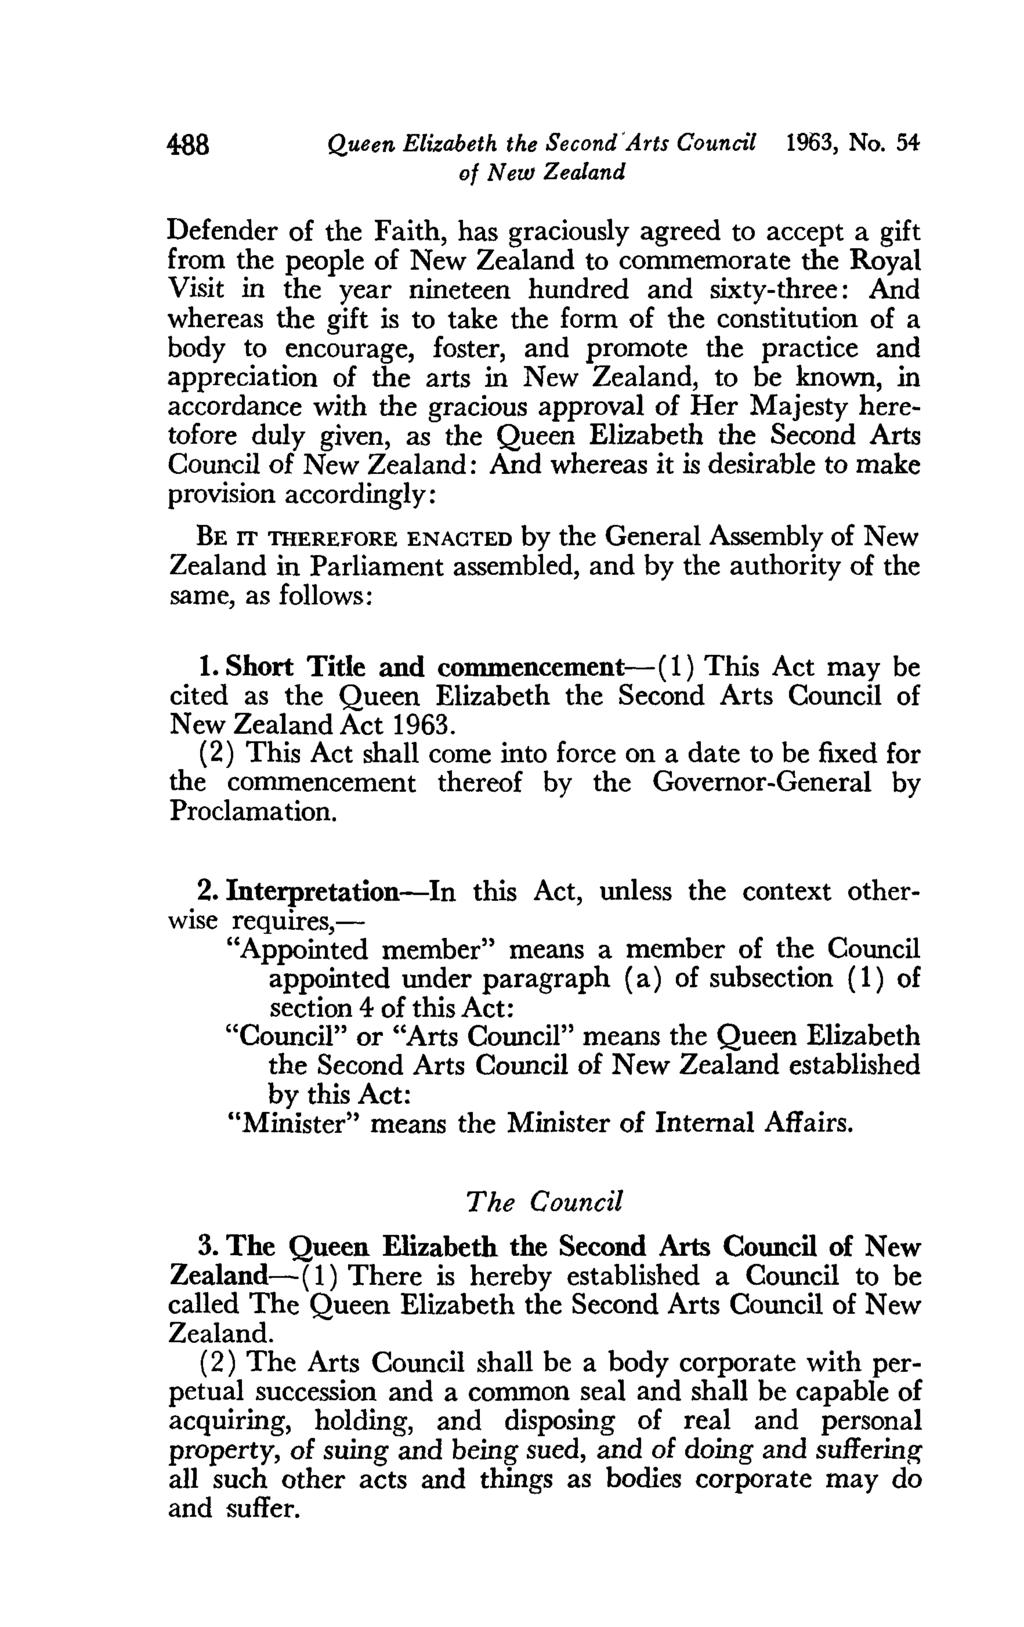 Queen Elizabeth the Second 'Arts Council 1963, No.